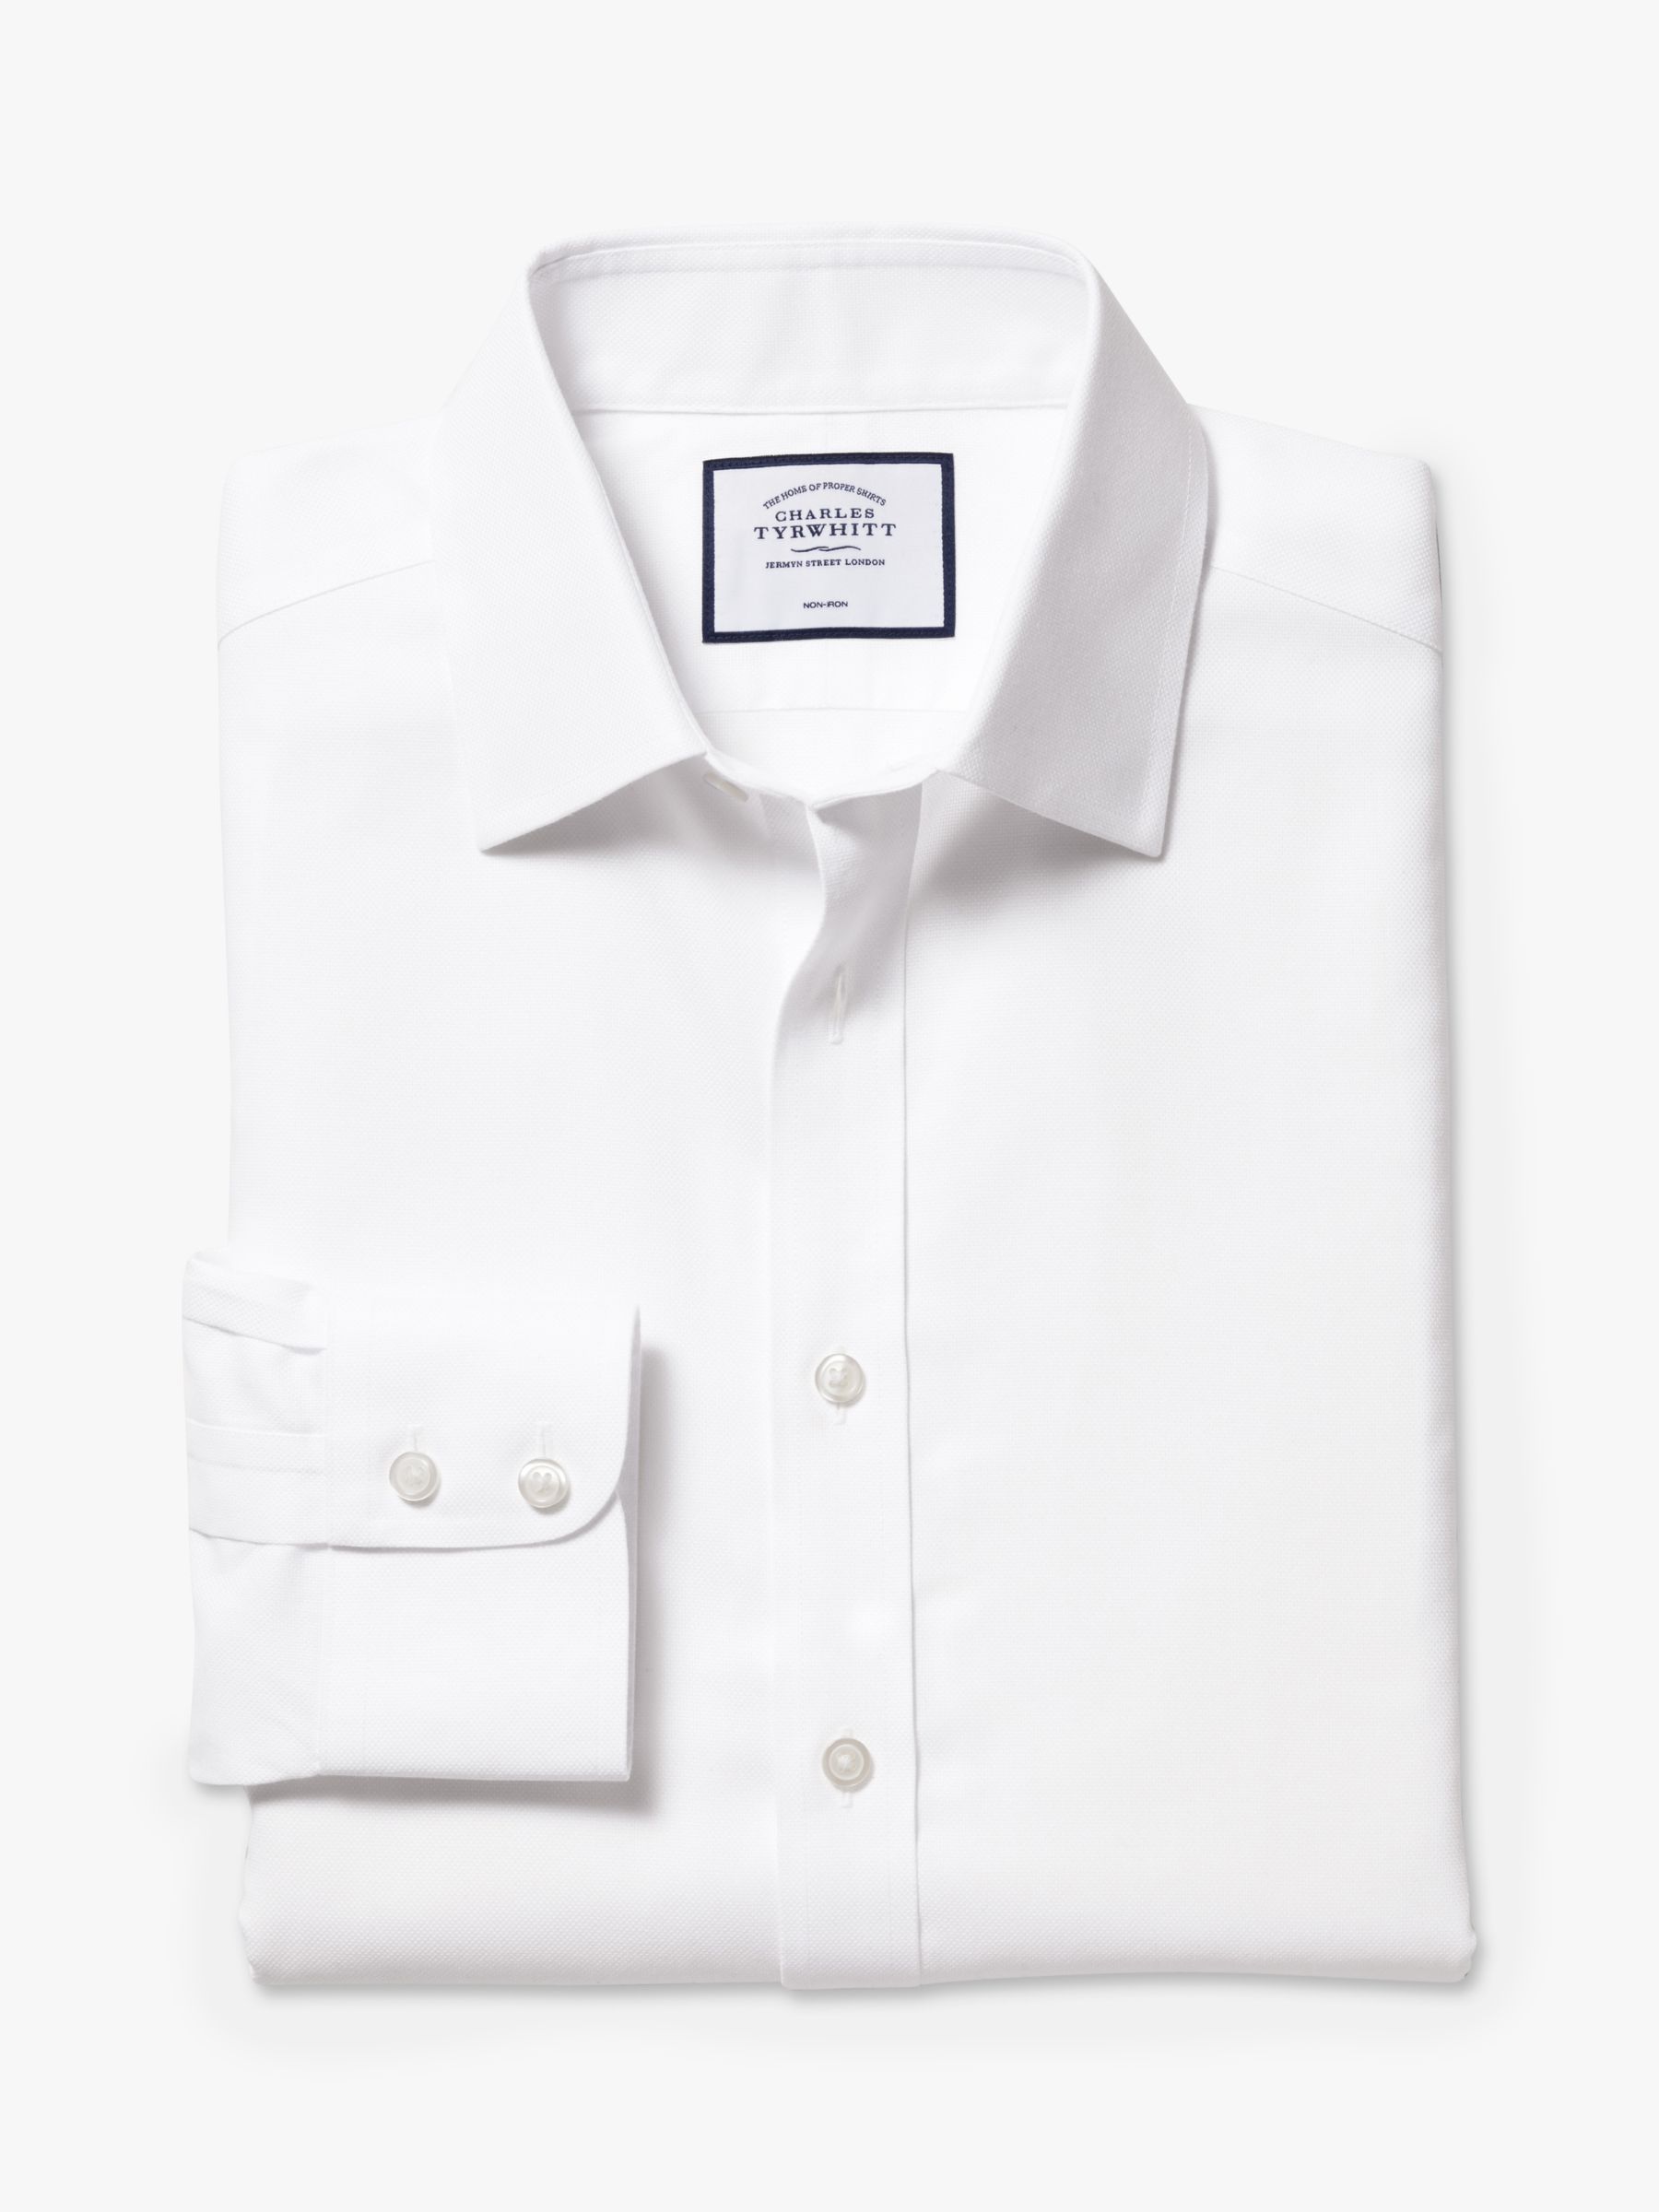 Charles Tyrwhitt Non-Iron Slim Fit Oxford Shirt, White, 14.5